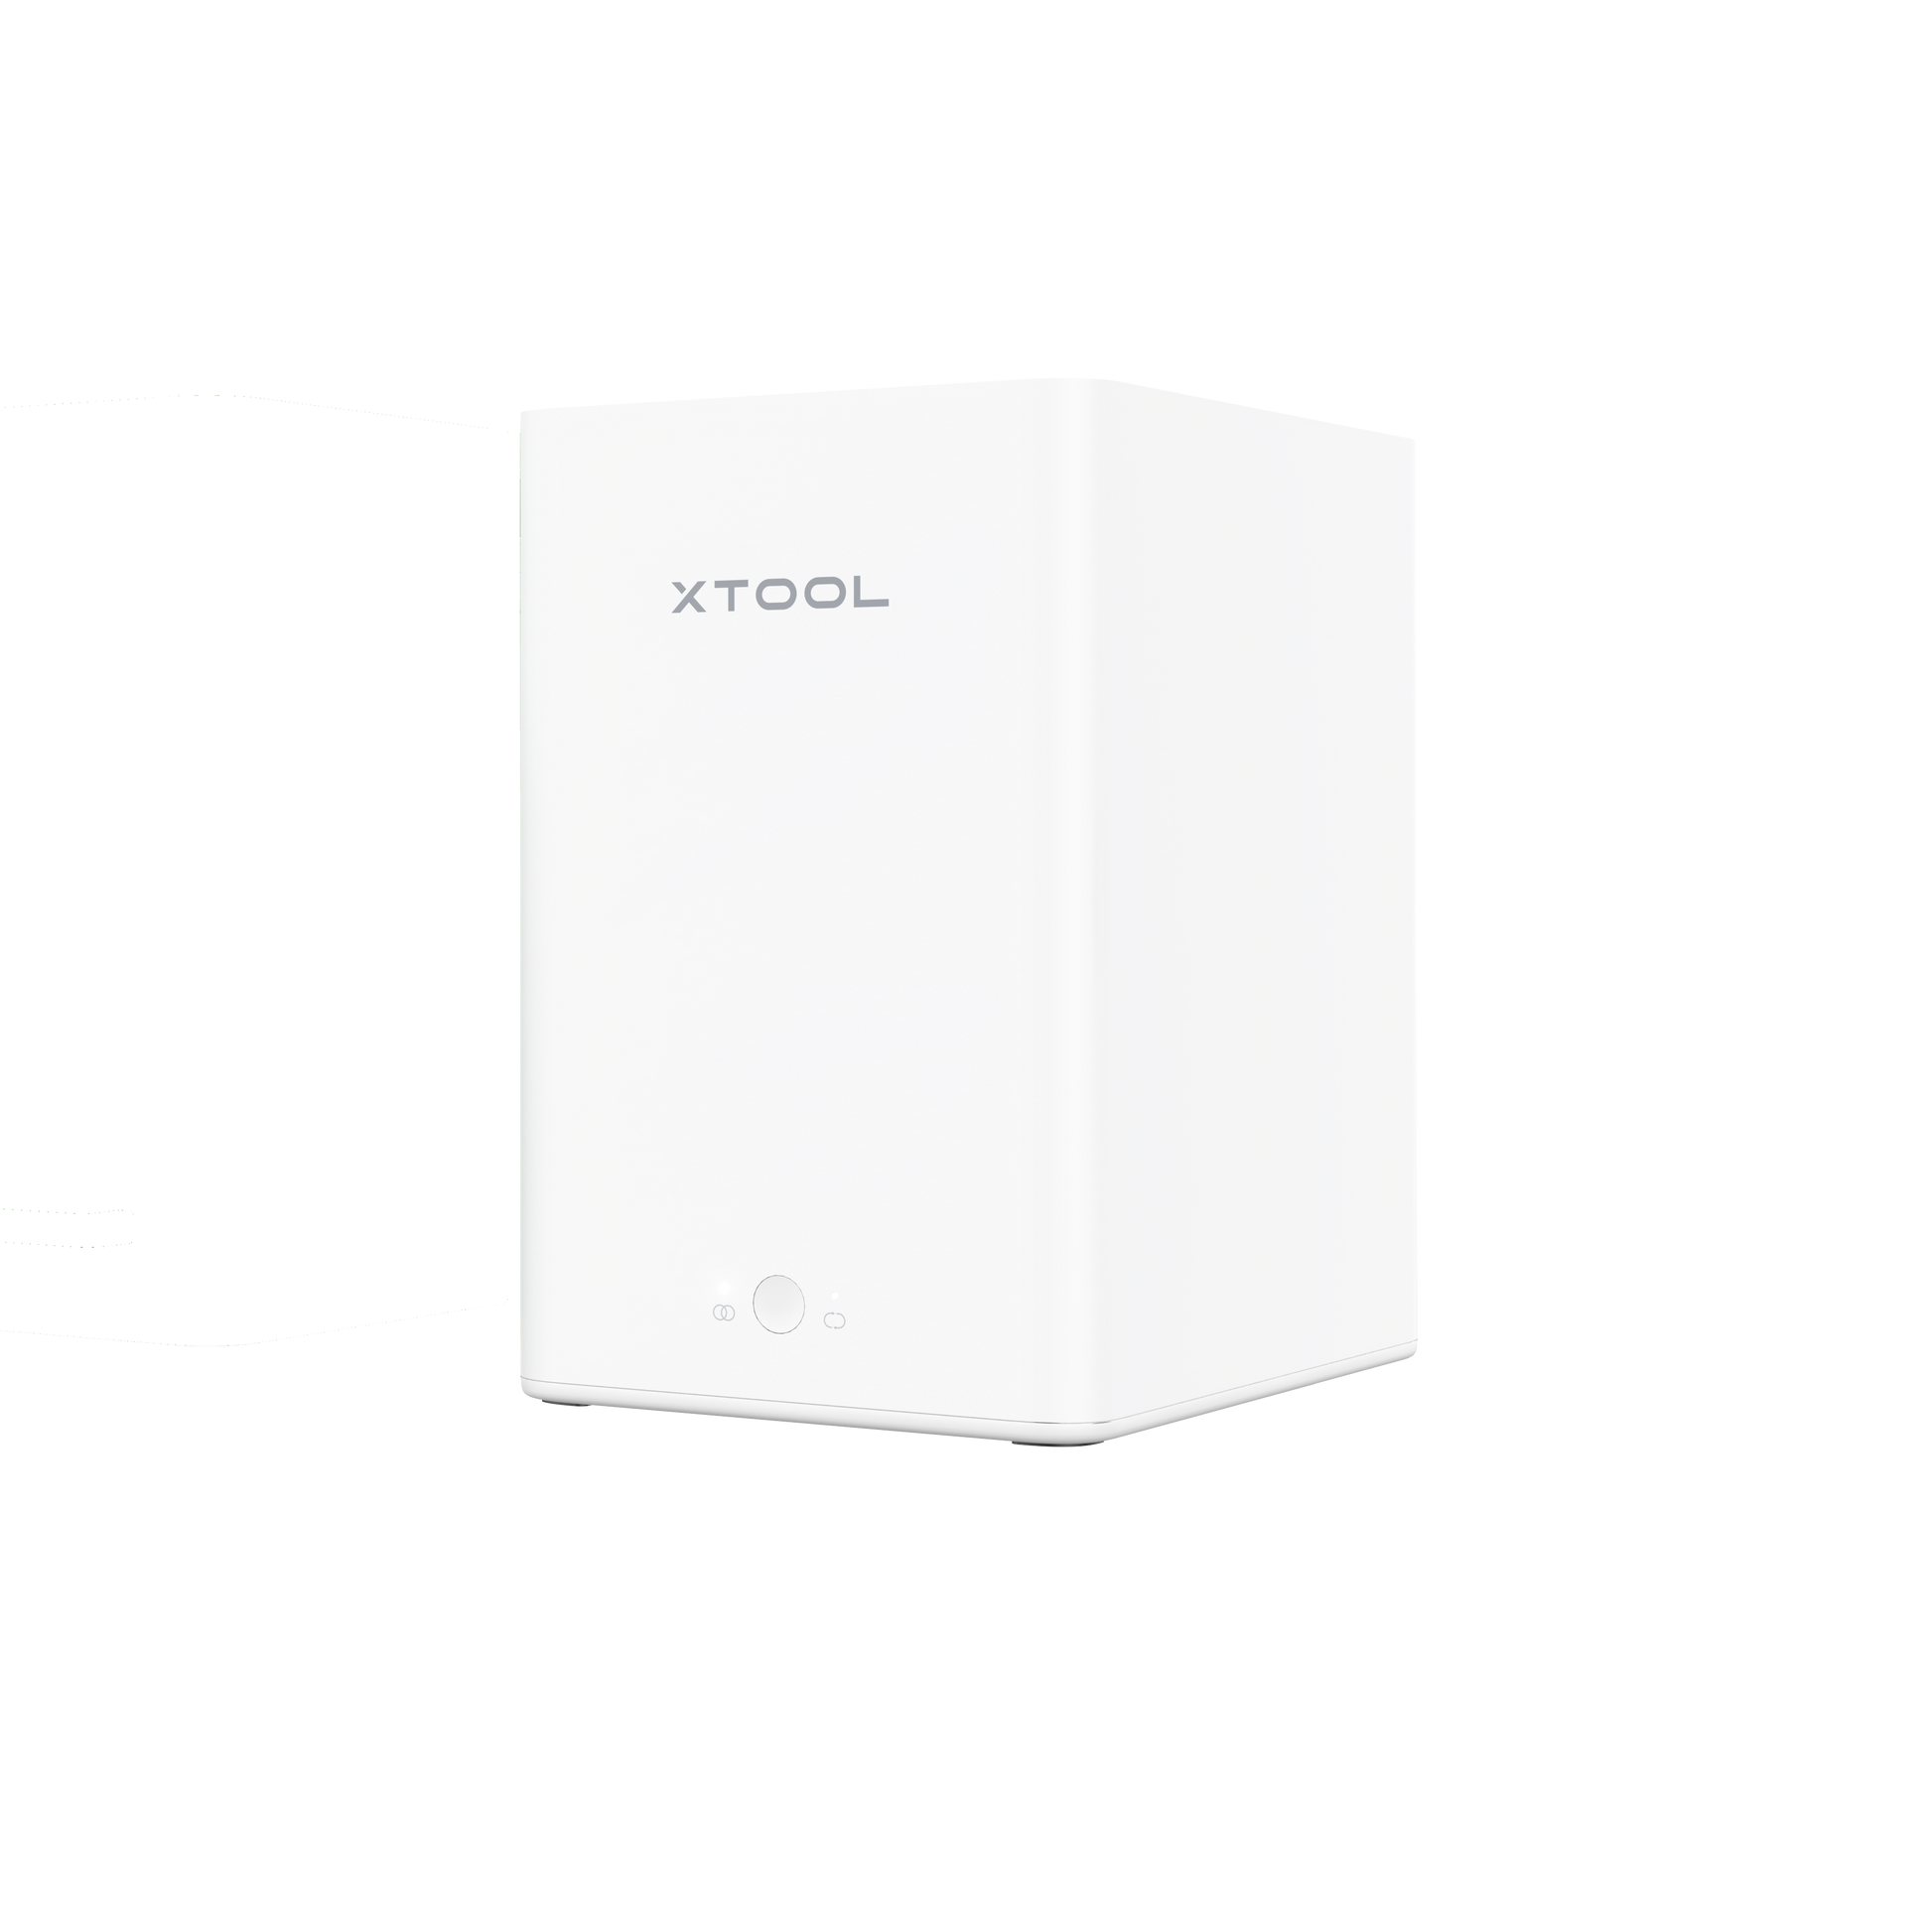 xTool F1 Laser Engraver with RA2 Pro, Slide Extension, Desktop Air Purifier